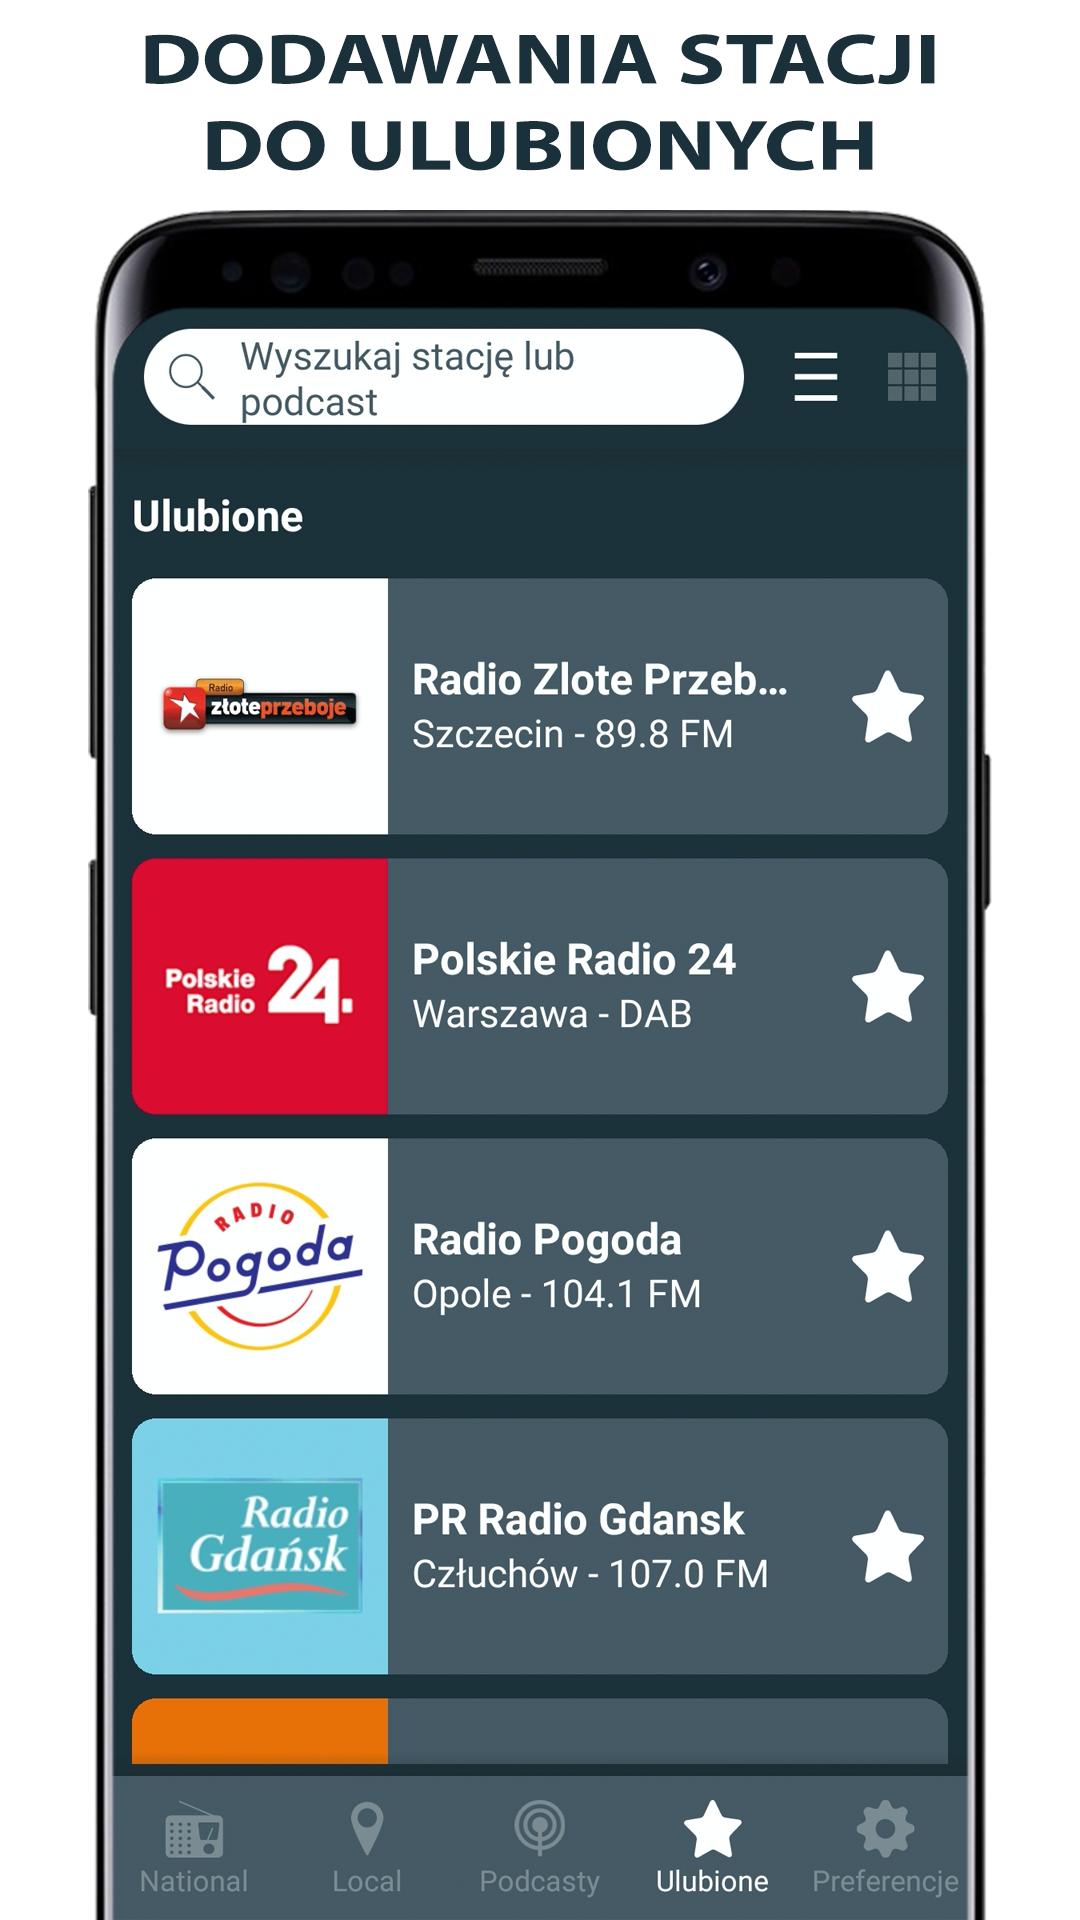 Radio Internetowe Polska for Android - APK Download